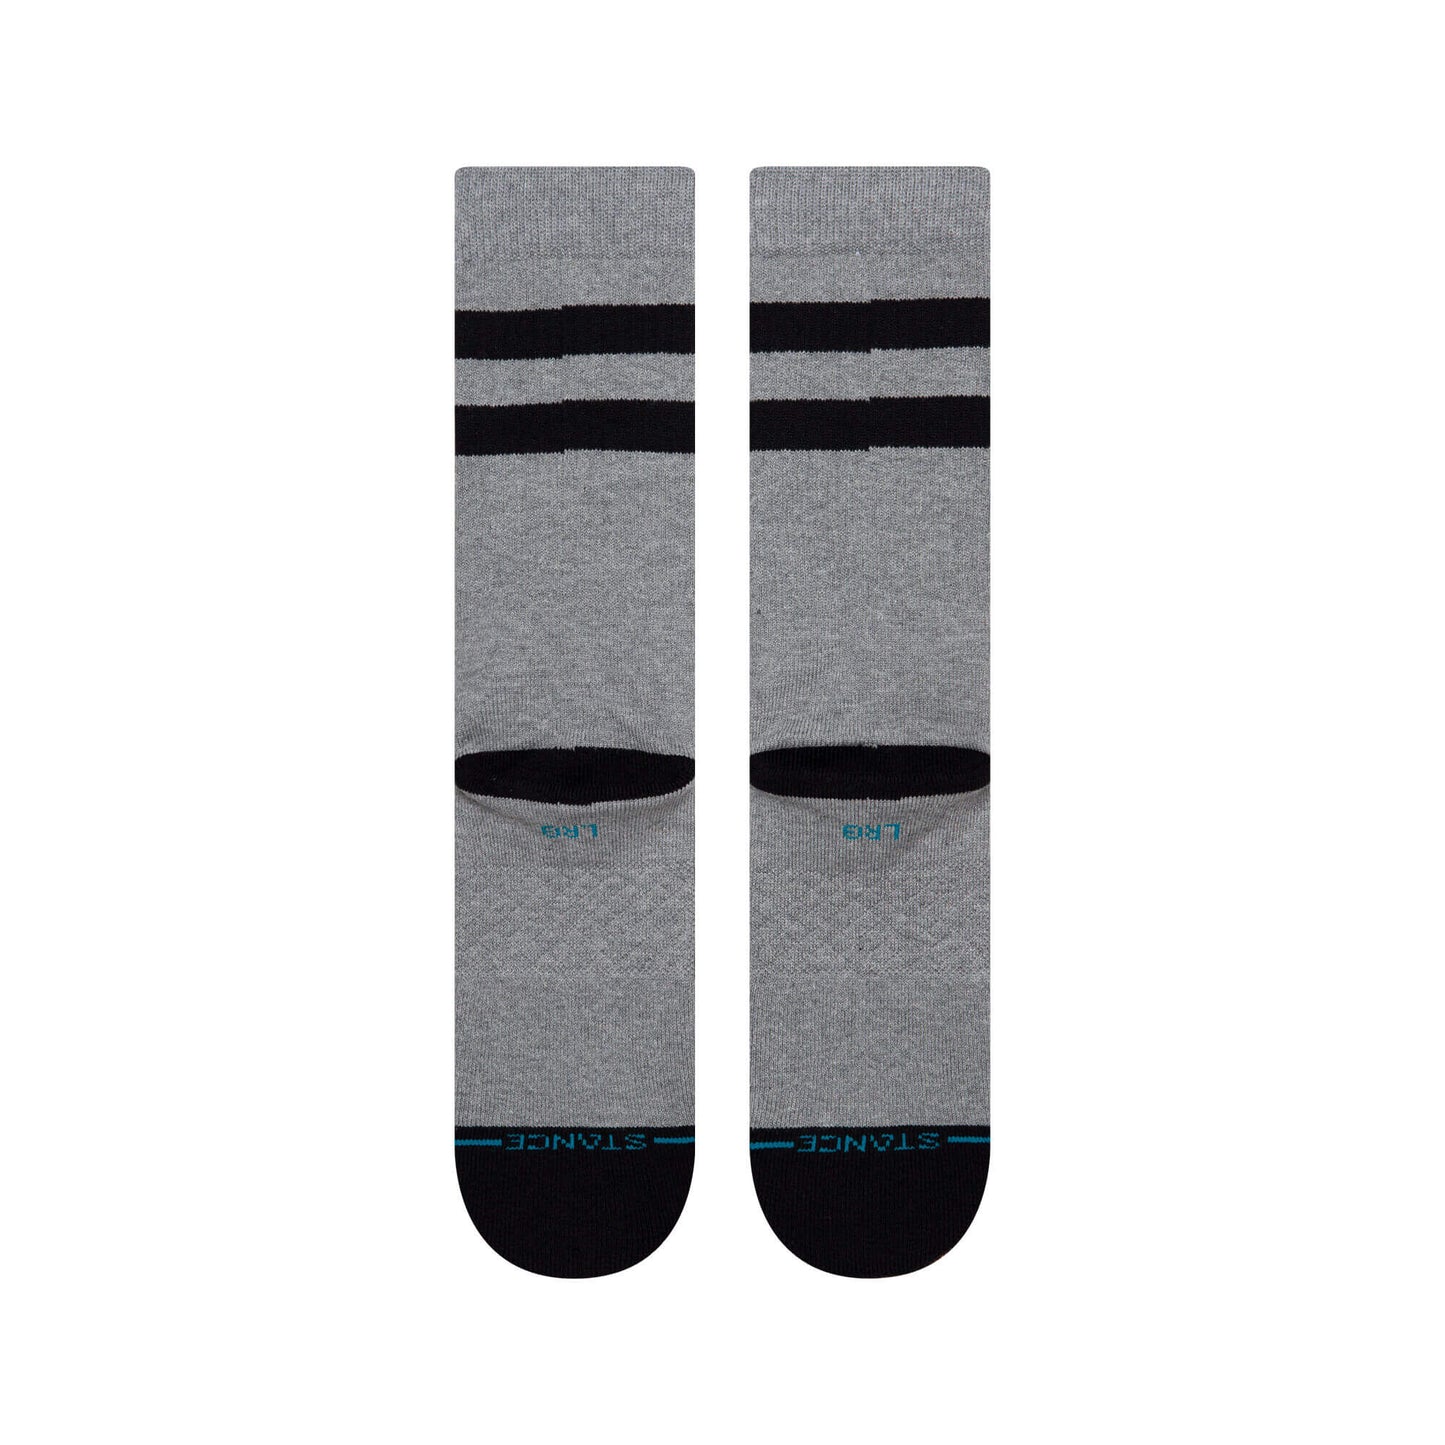 Stance Adult Crew Socks - Still Rippin - Grey 